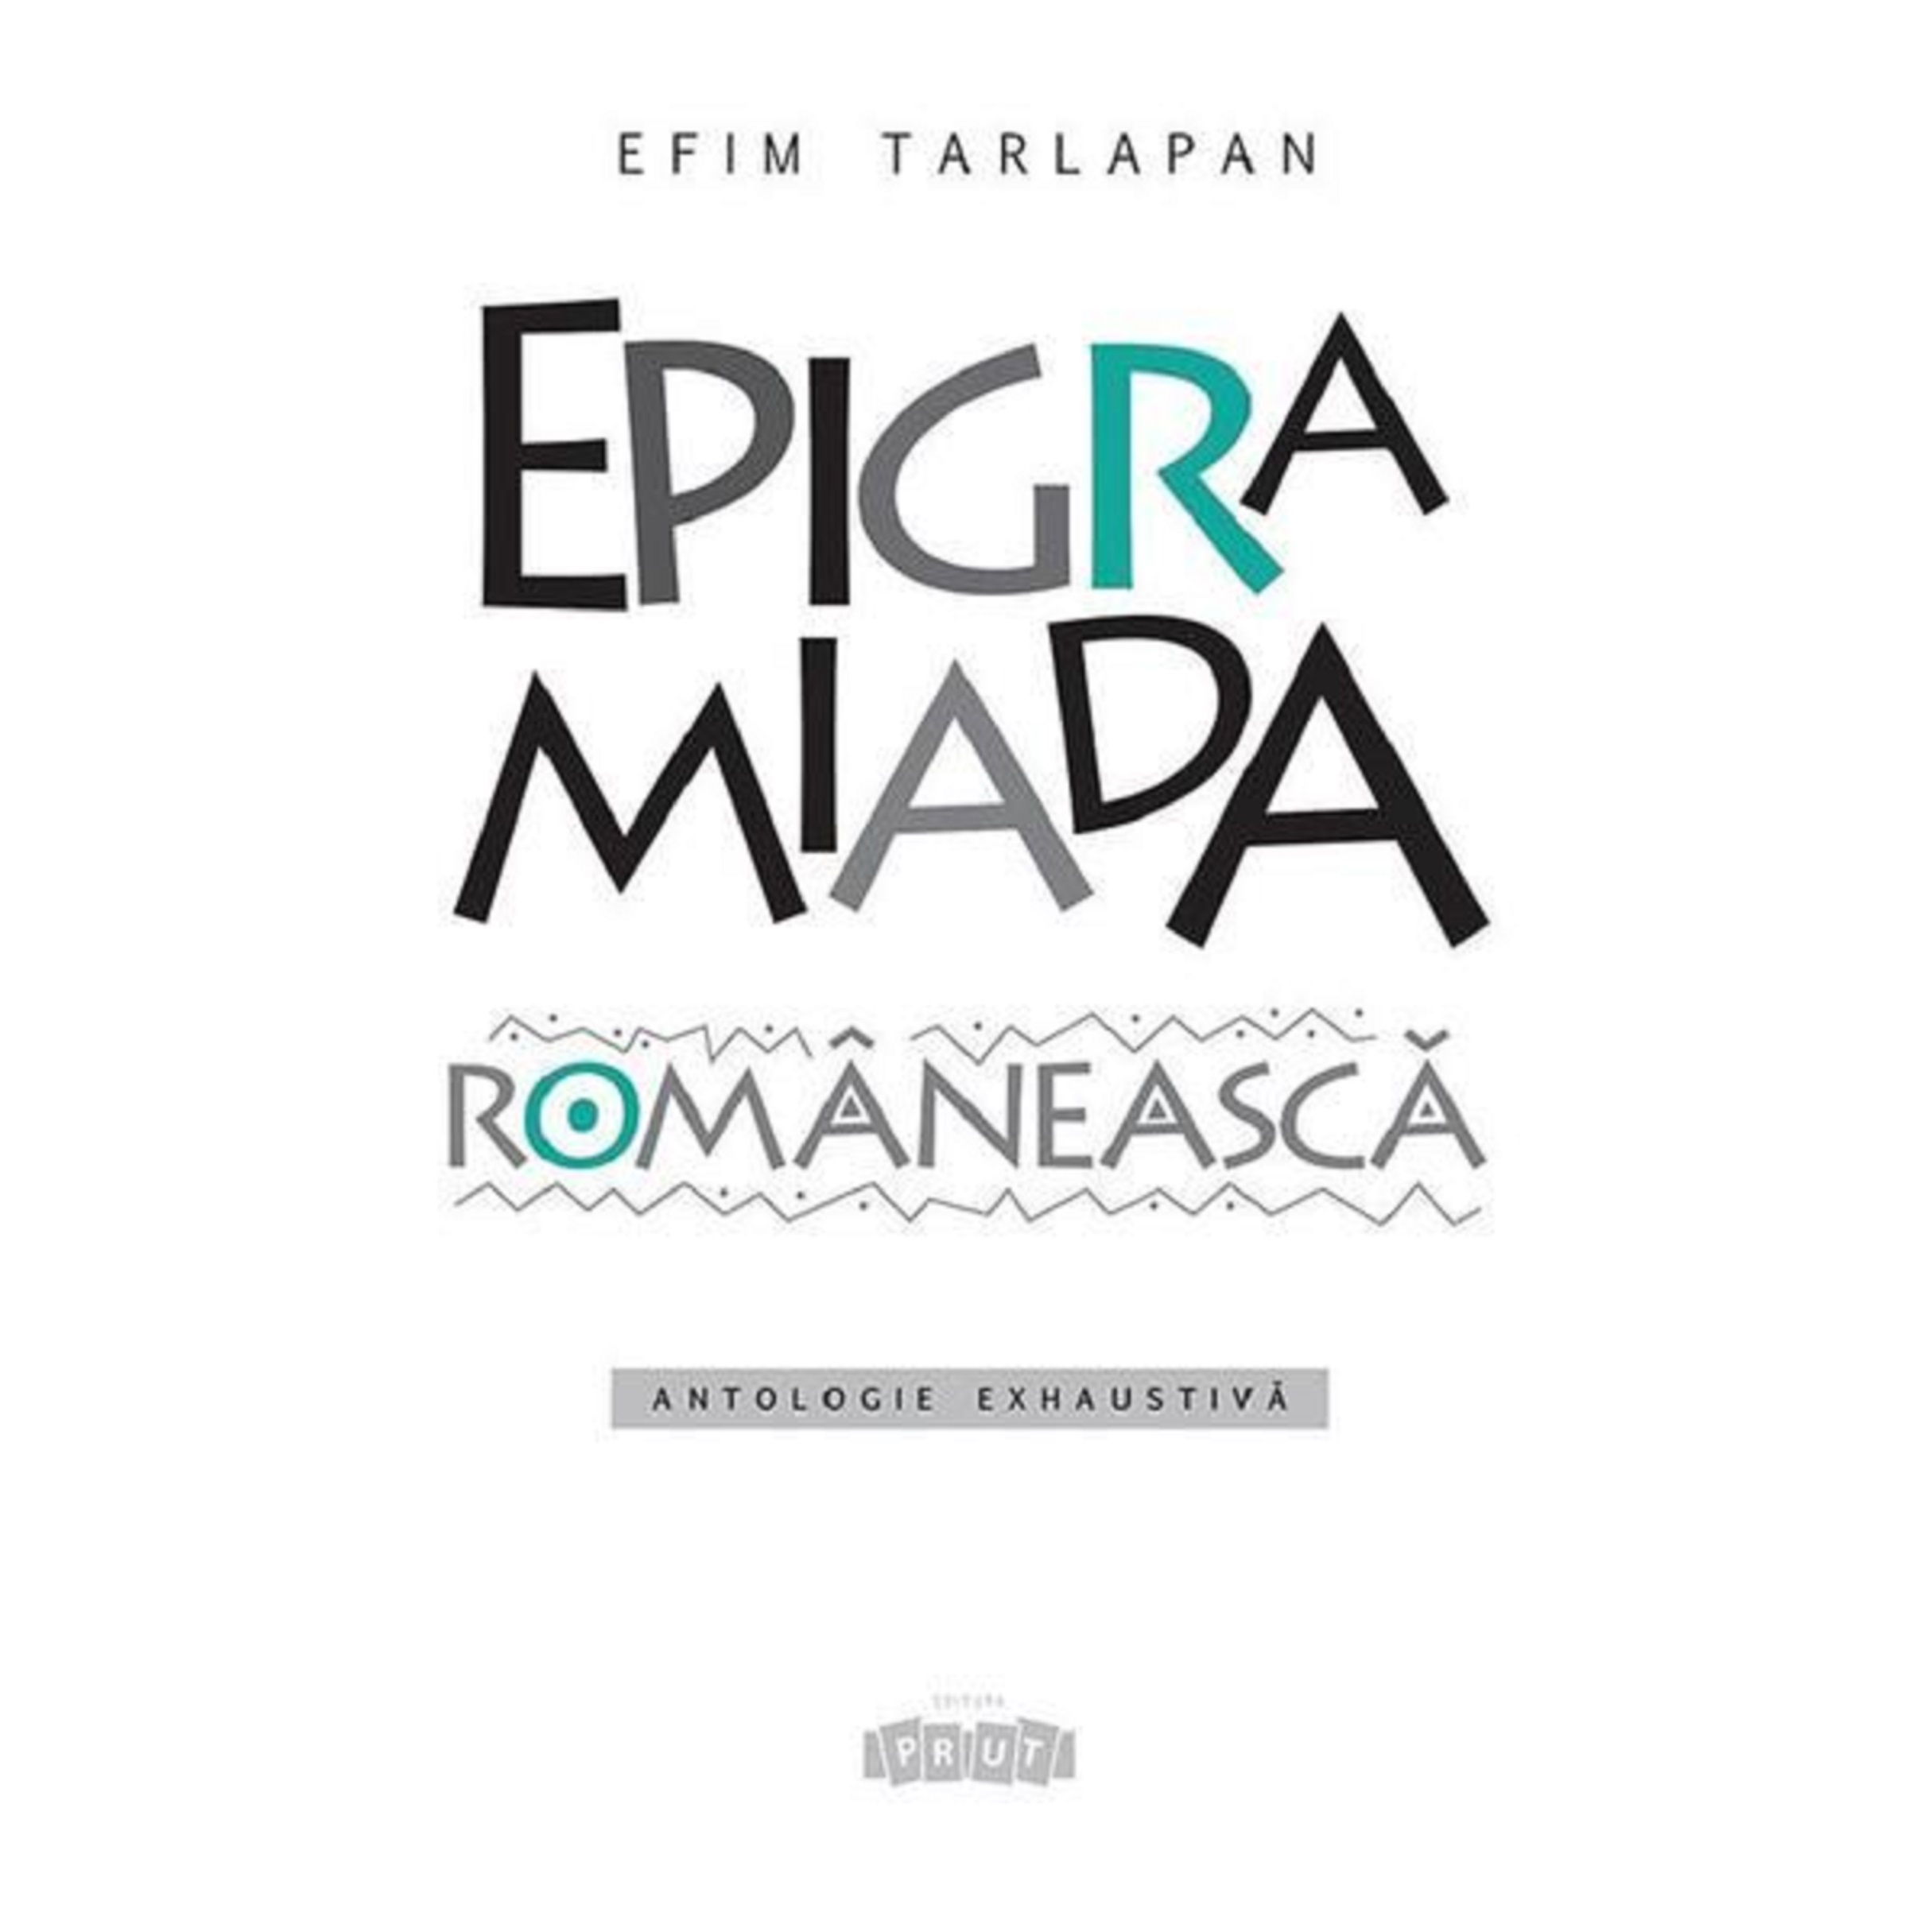 Epigramiada romaneasca | Efim Tarlapan carturesti.ro poza bestsellers.ro